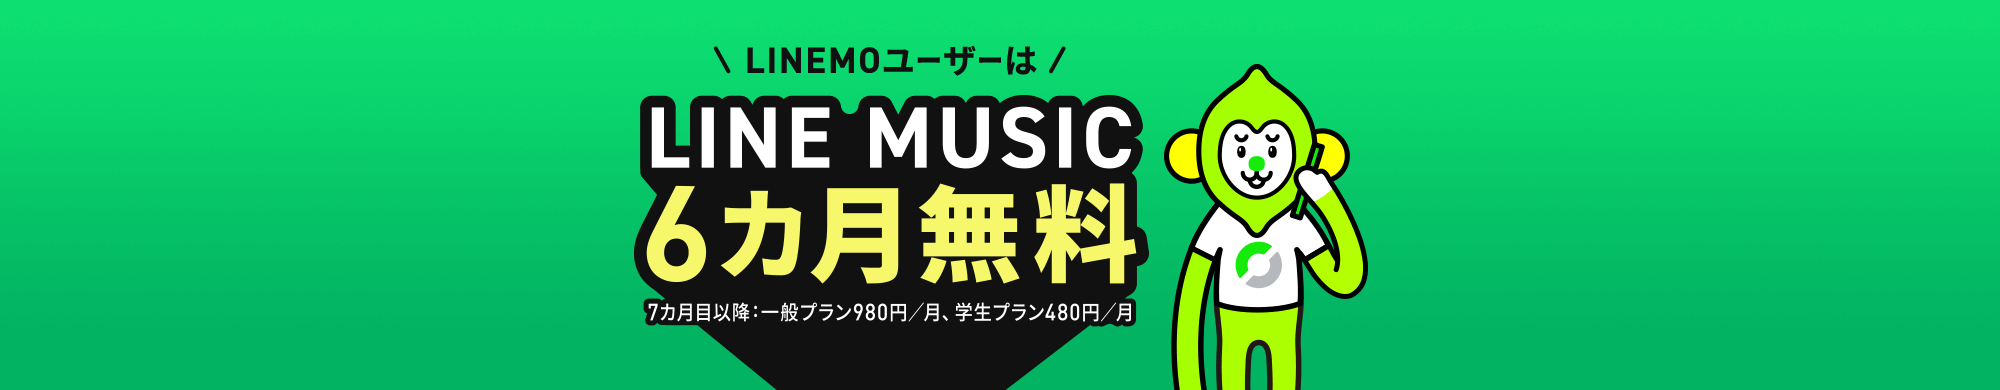 LIEMOユーザーはLINE MUSIC6カ月無料